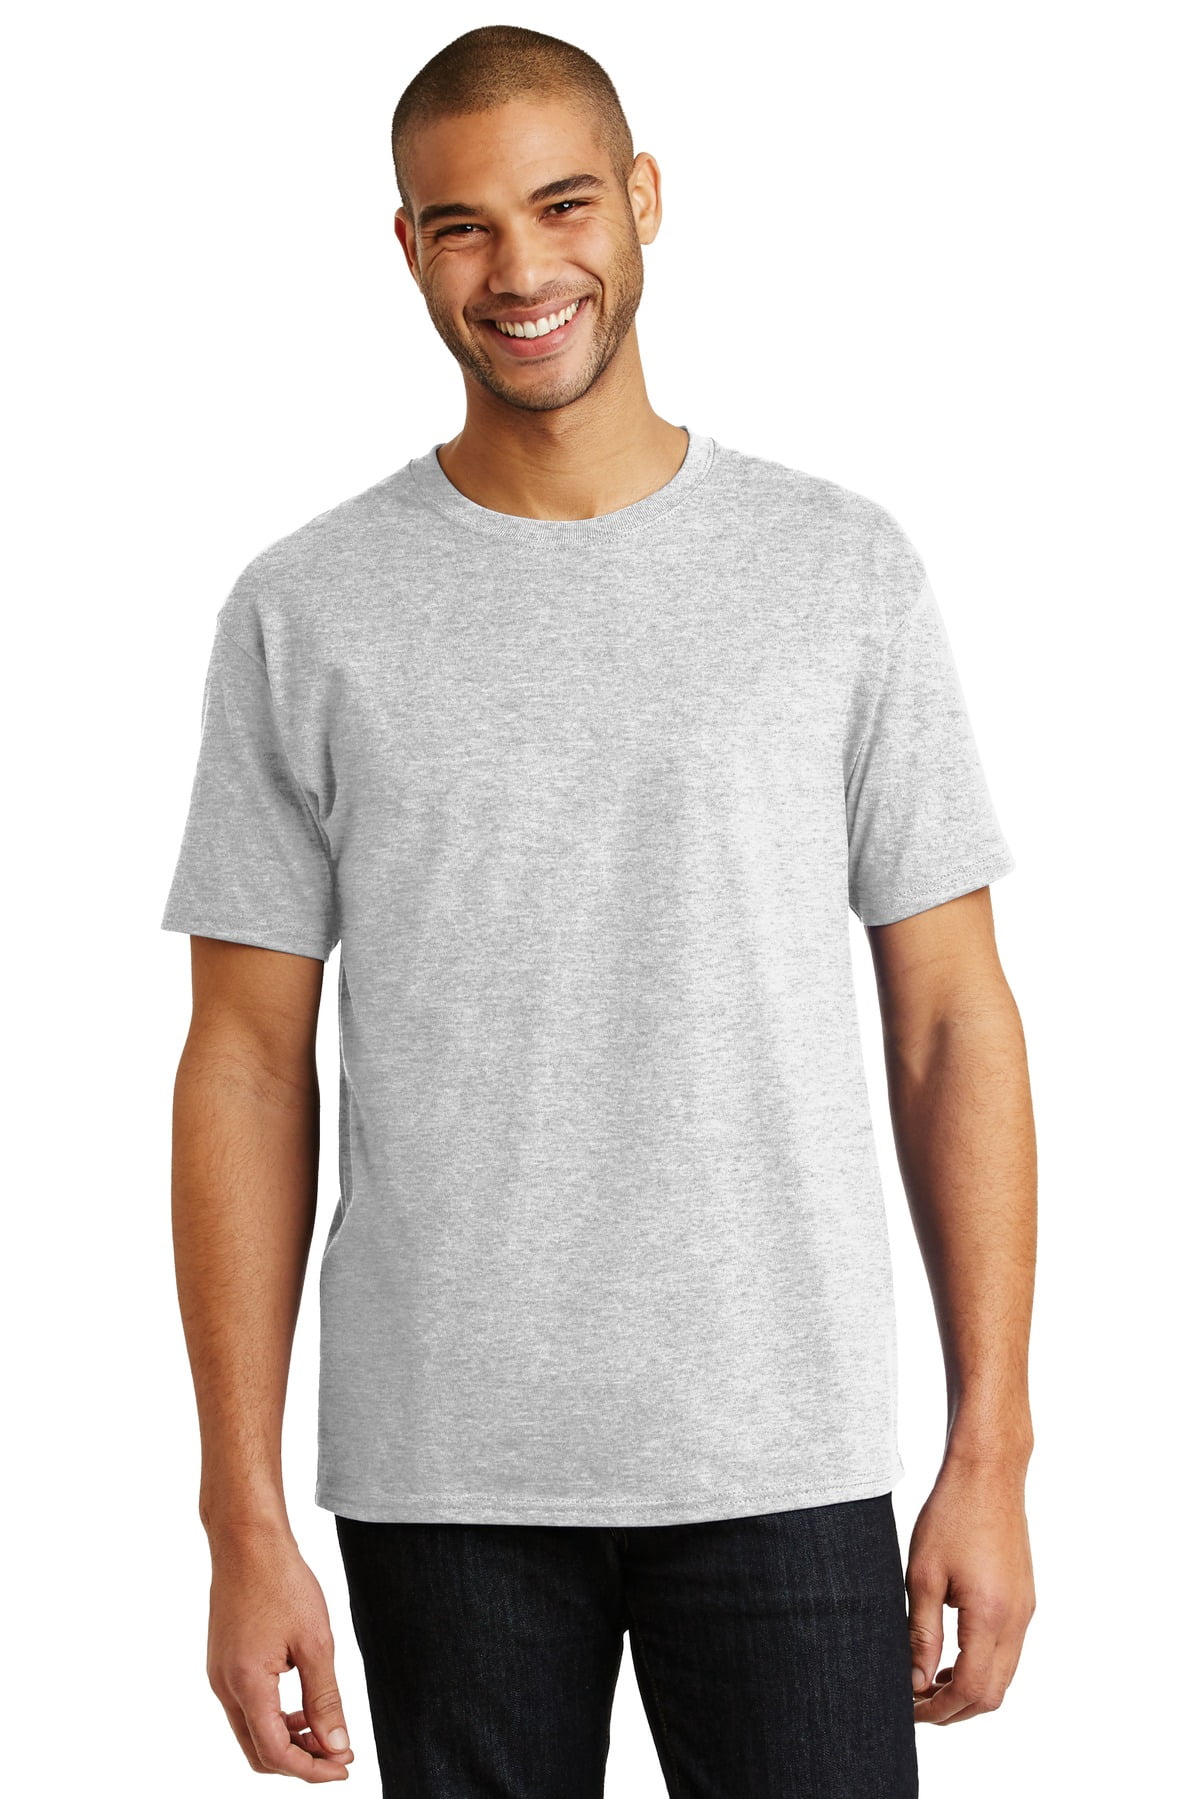 Tagless 100% Cotton T-Shirt